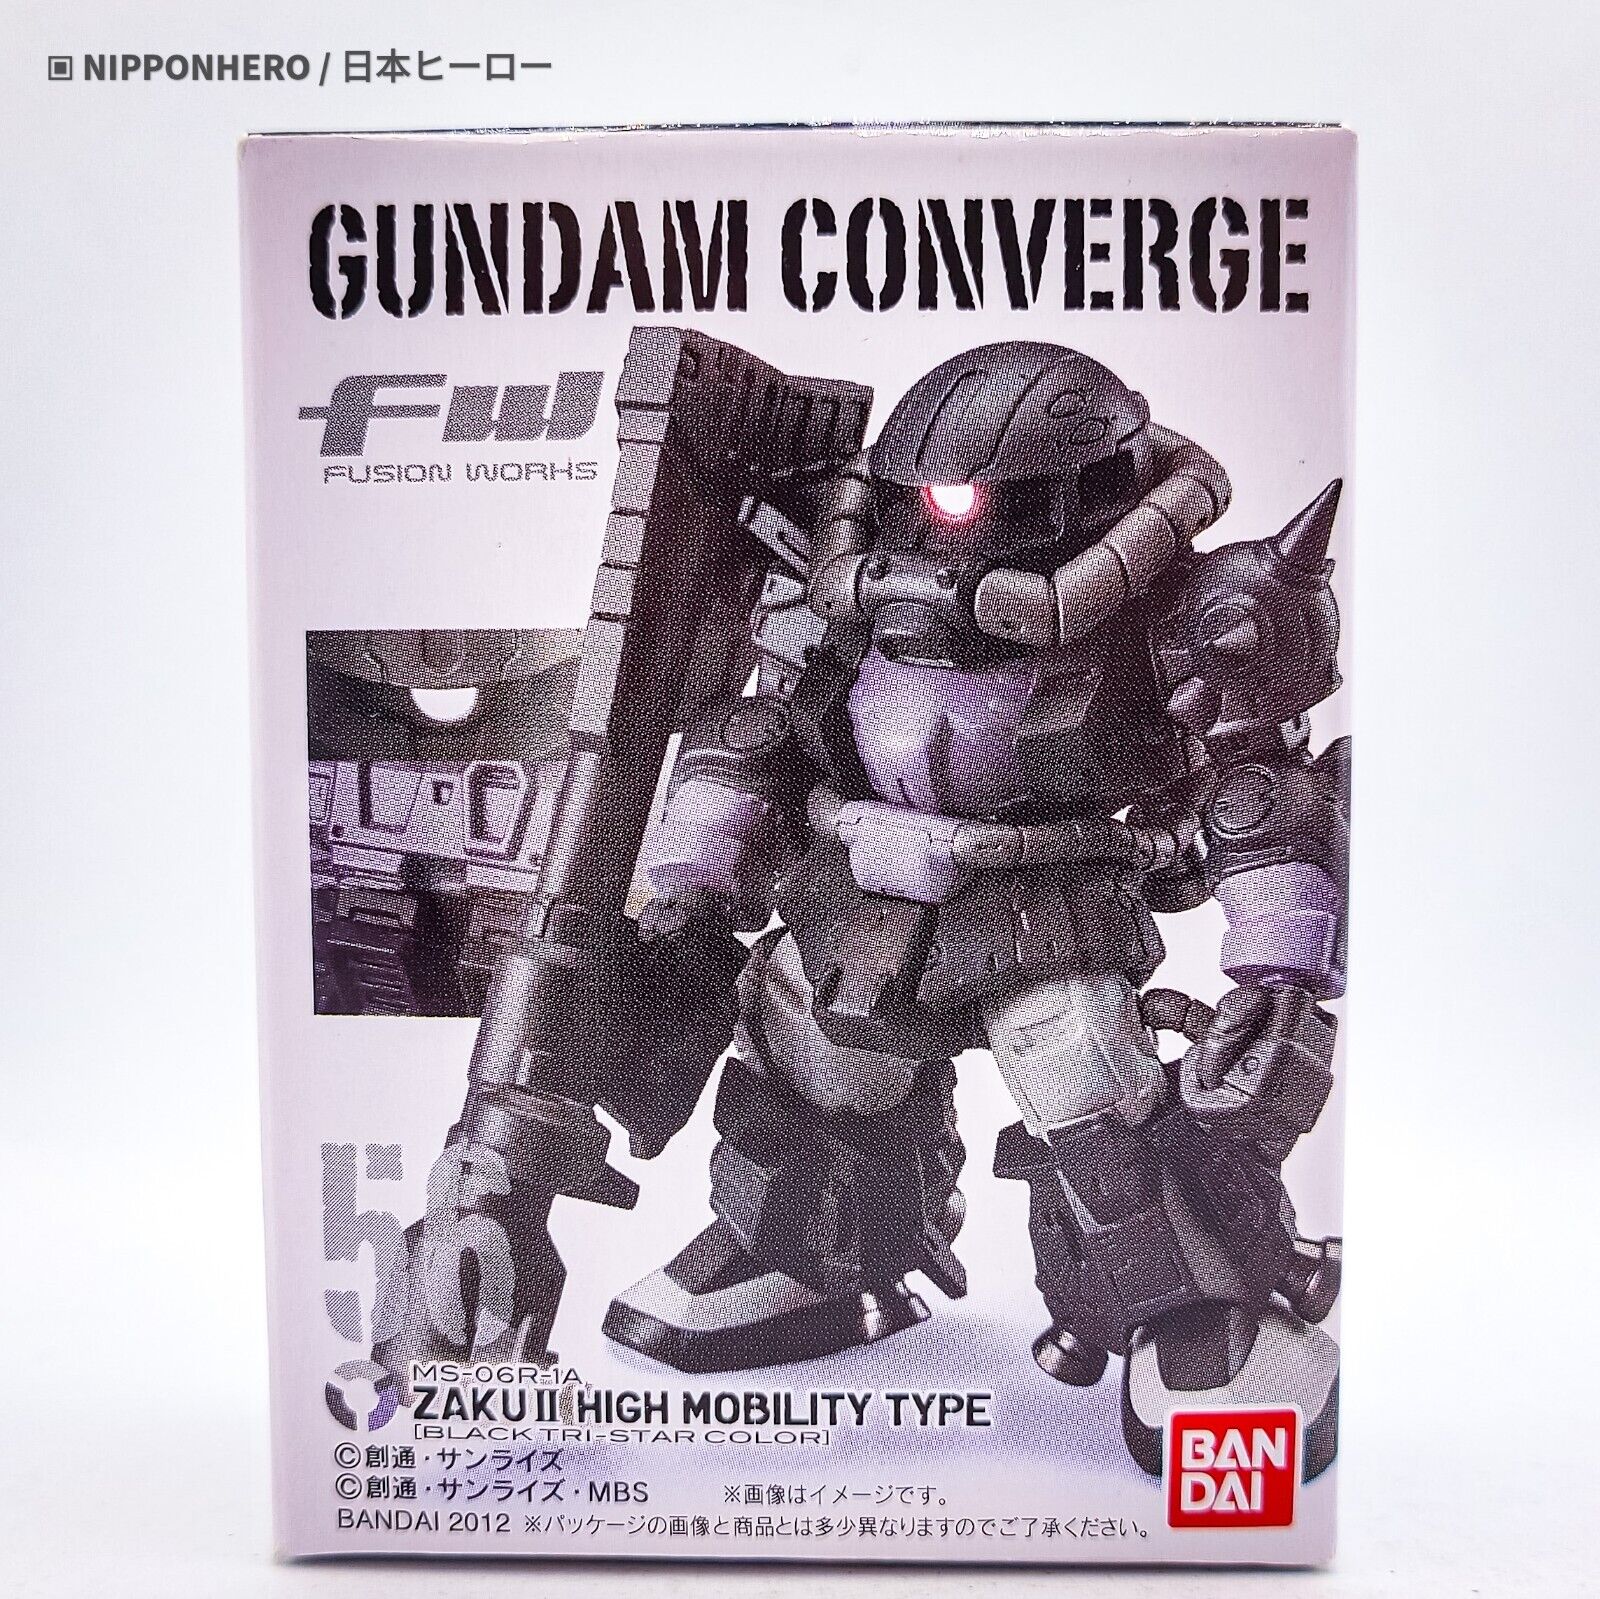 Gundam Converge ZAKU II HIGH MOBILITY TYPE BLACK TRI-STARS Mobile Suit Figure 56